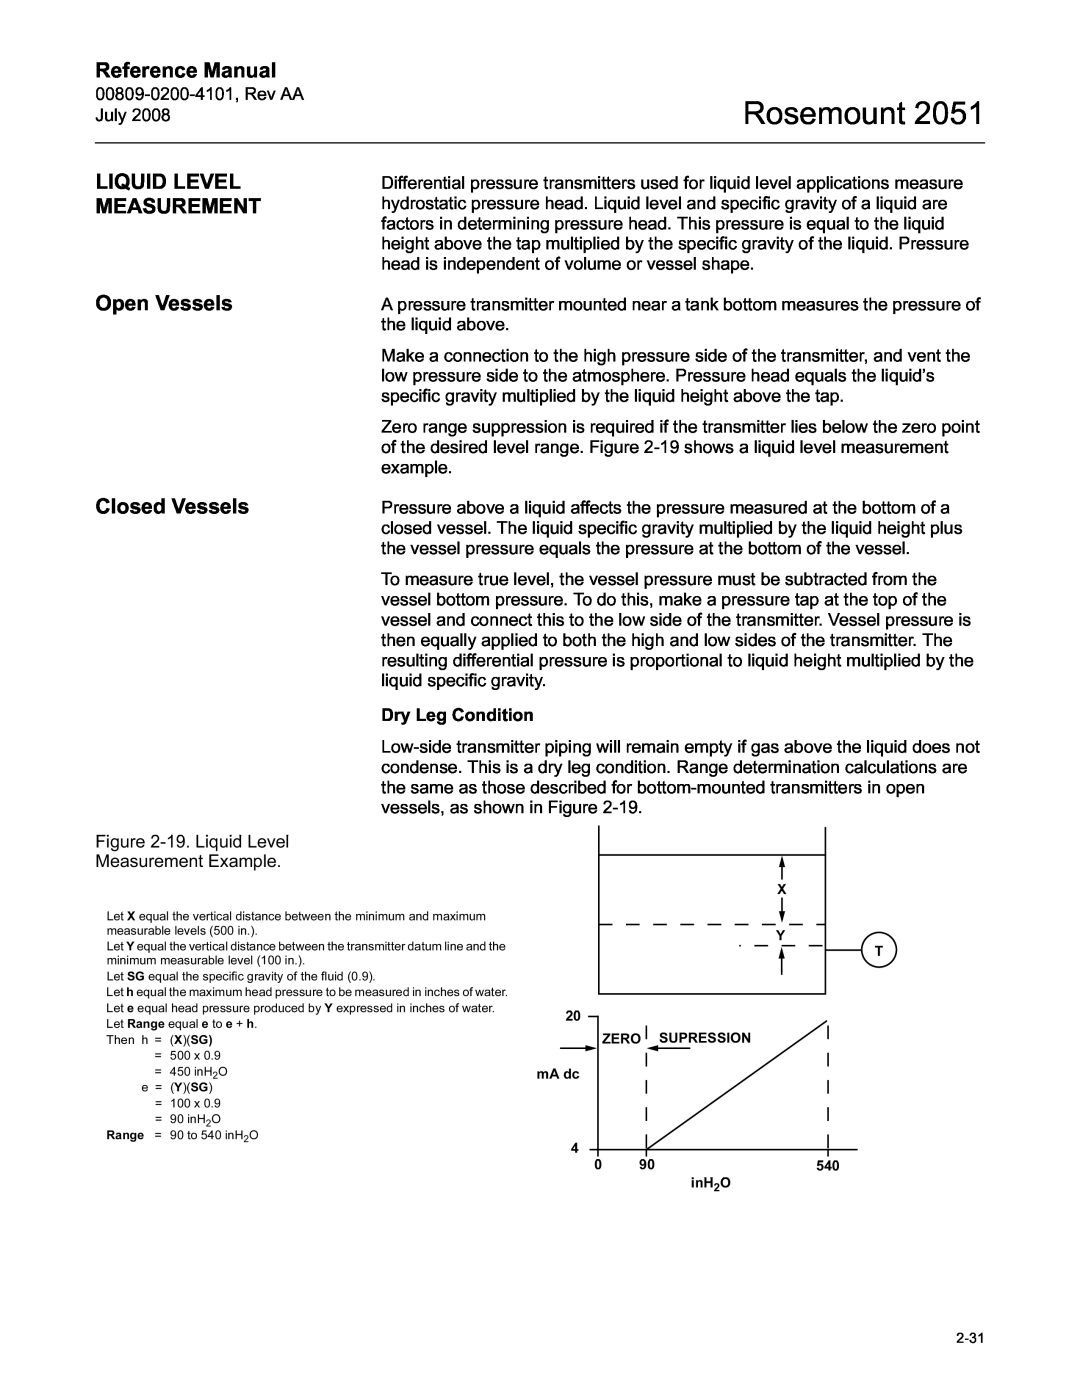 Emerson Process Management 2051 manual Liquid Level Measurement, Open Vessels Closed Vessels, Rosemount, Reference Manual 